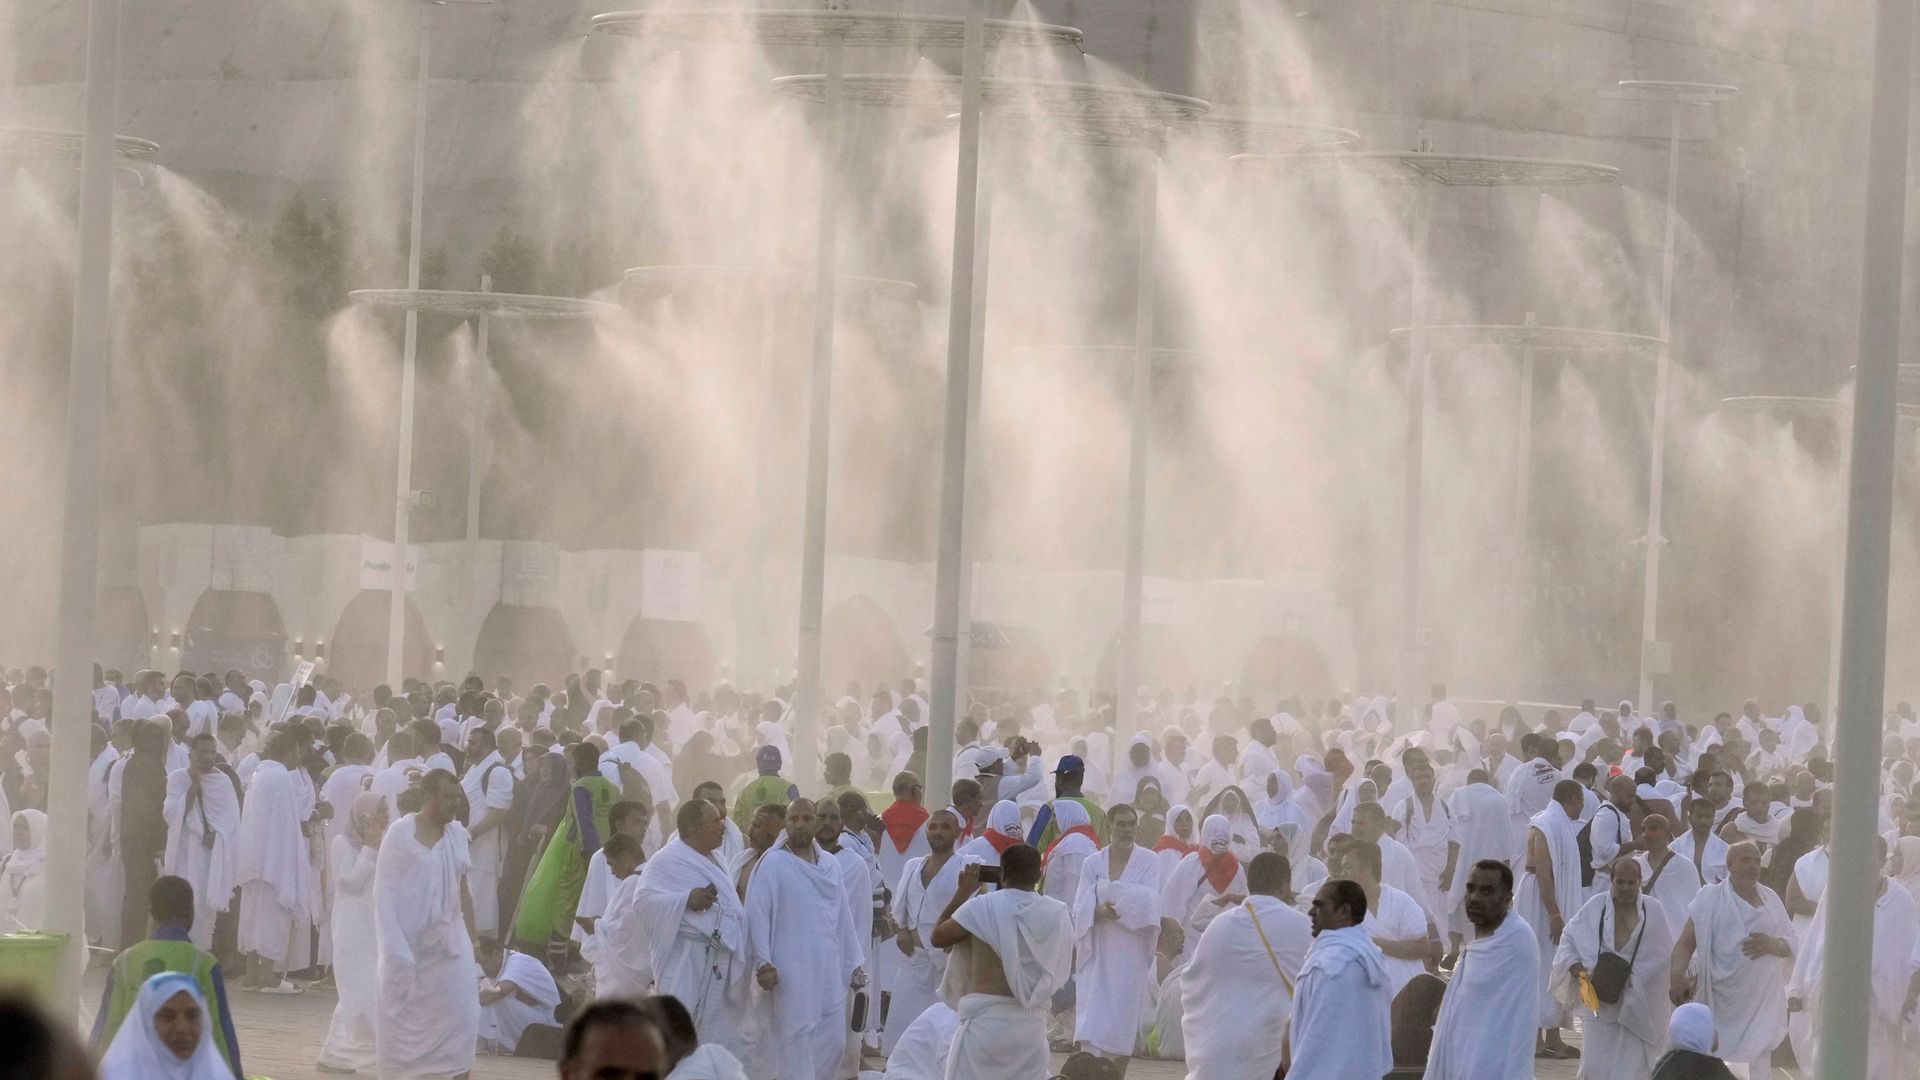 Fourteen Jordanians die during Hajj pilgrimage in Saudi Arabia